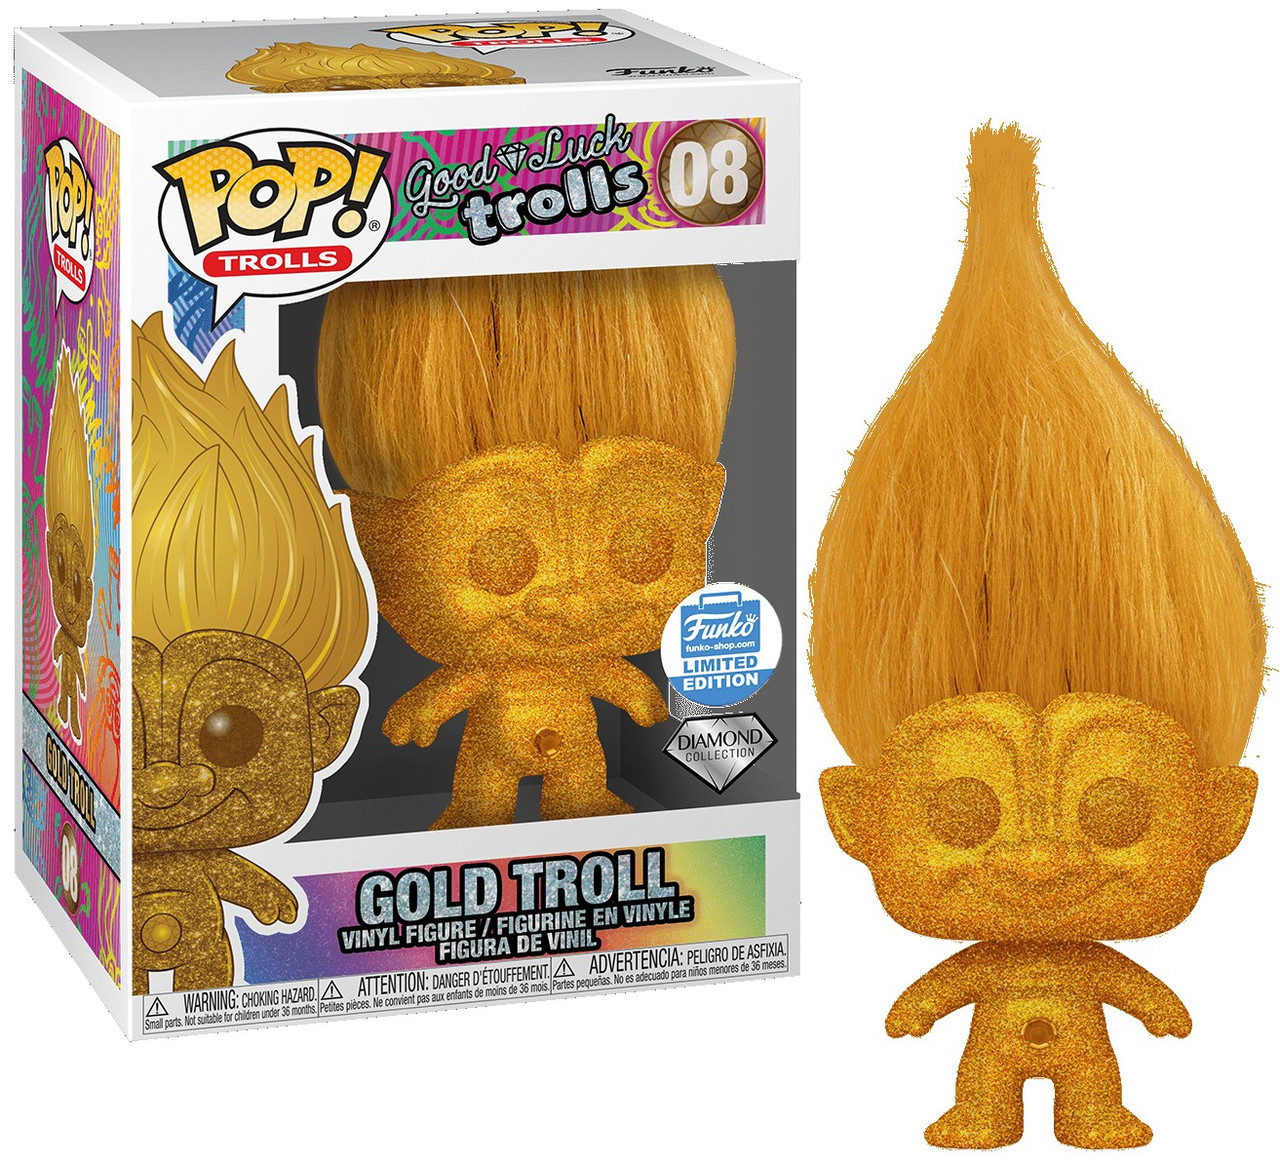 Funko Good Luck Trolls Pop Trolls Gold Troll Exclusive Vinyl Figure 08 Diamond Collection Toywiz - best trolling best games to troll on roblox